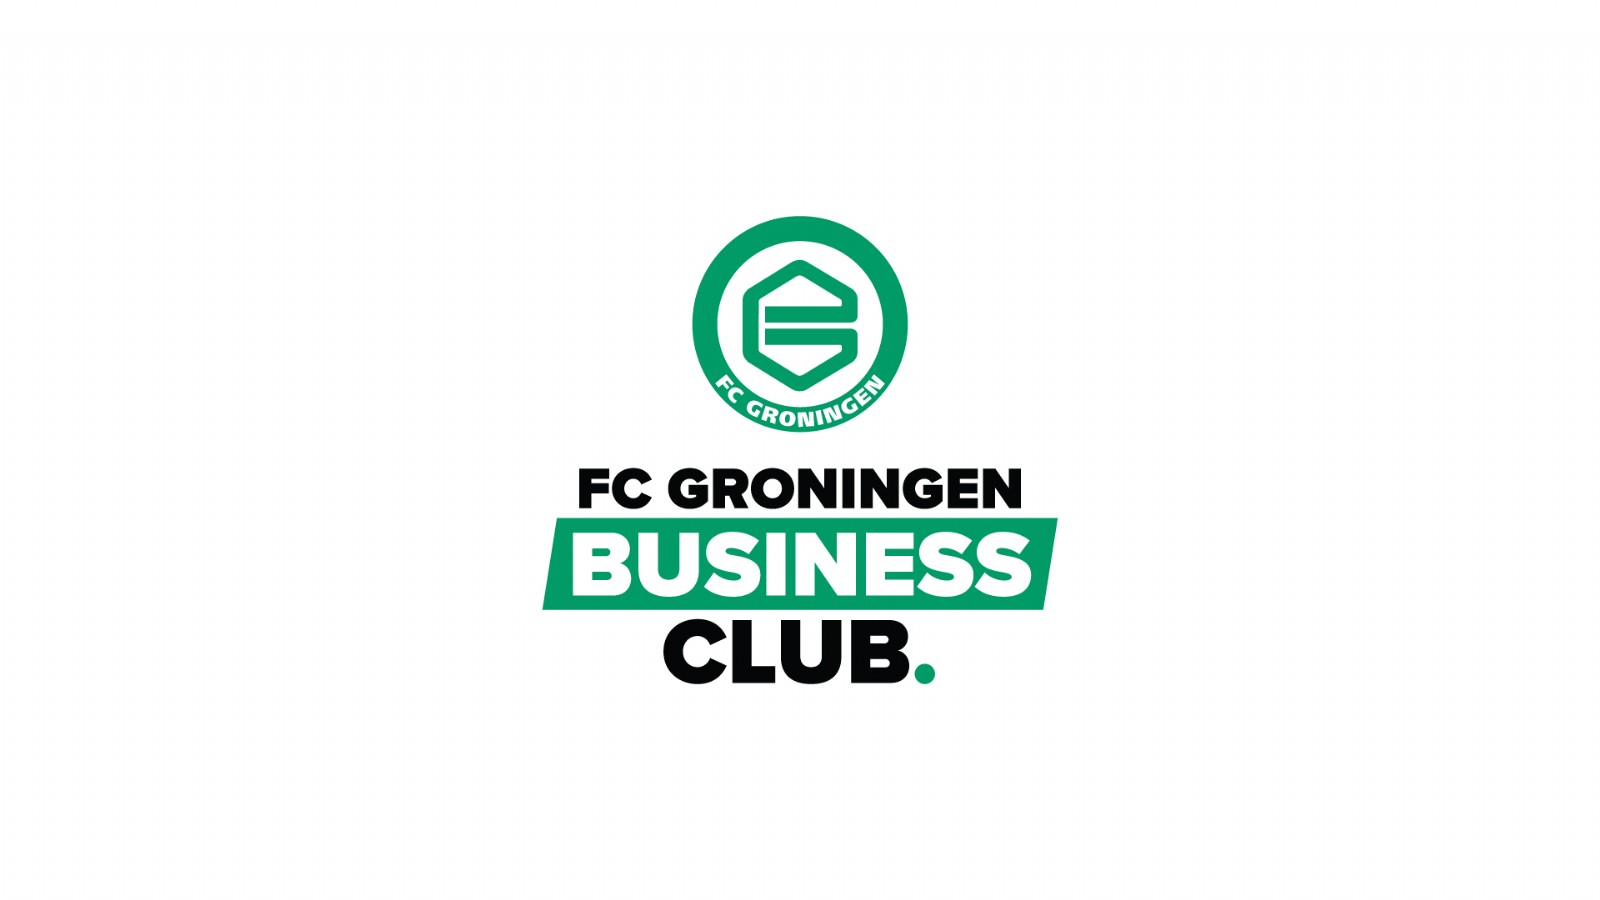 FCG-Business-Club-Logo-1080x1920